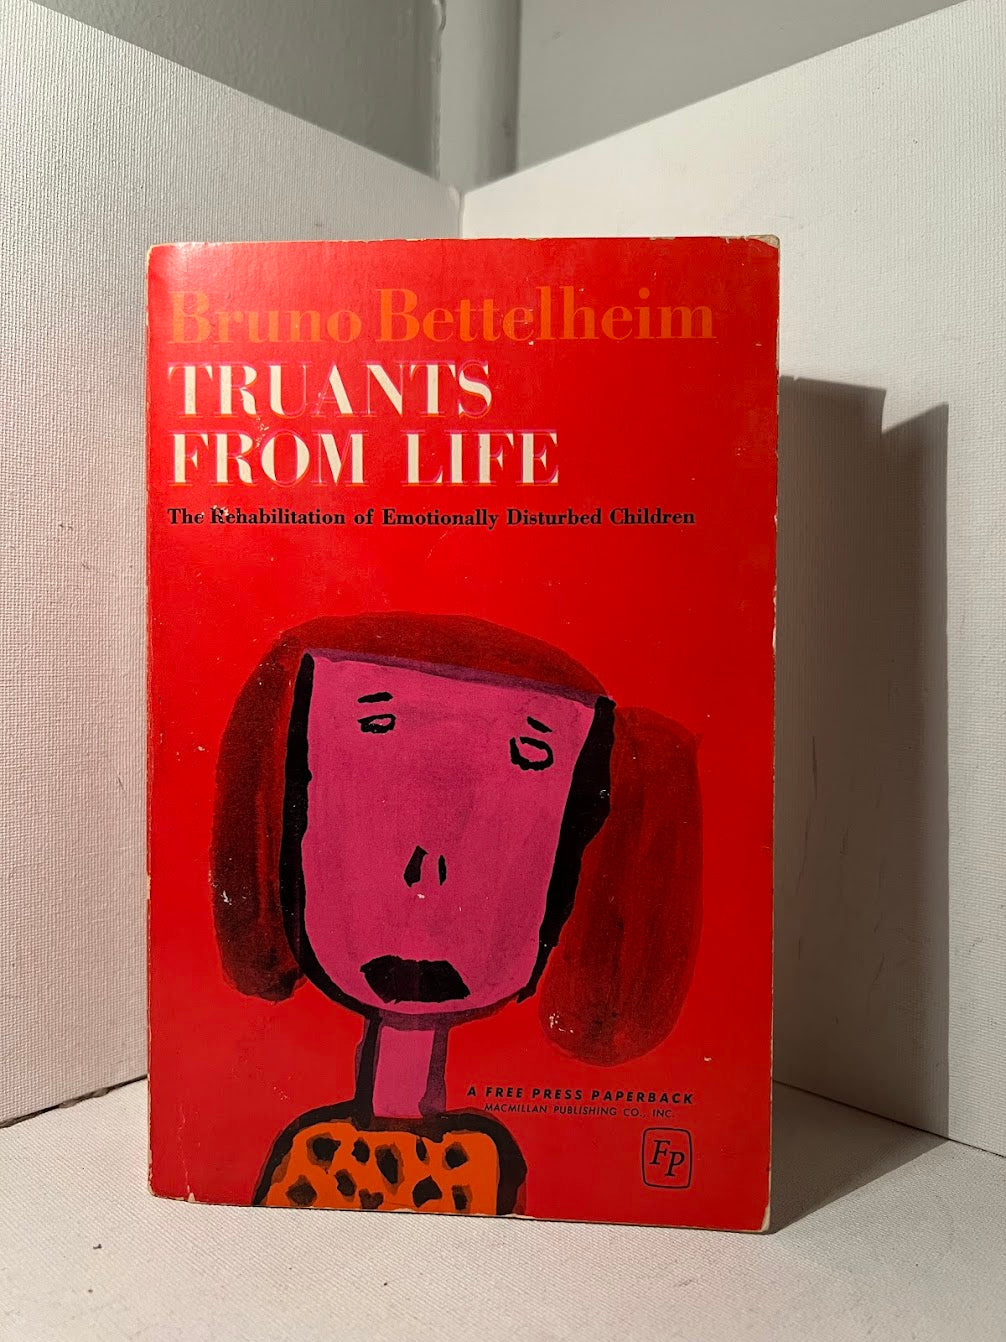 Truants From Life by Bruno Bettelheim